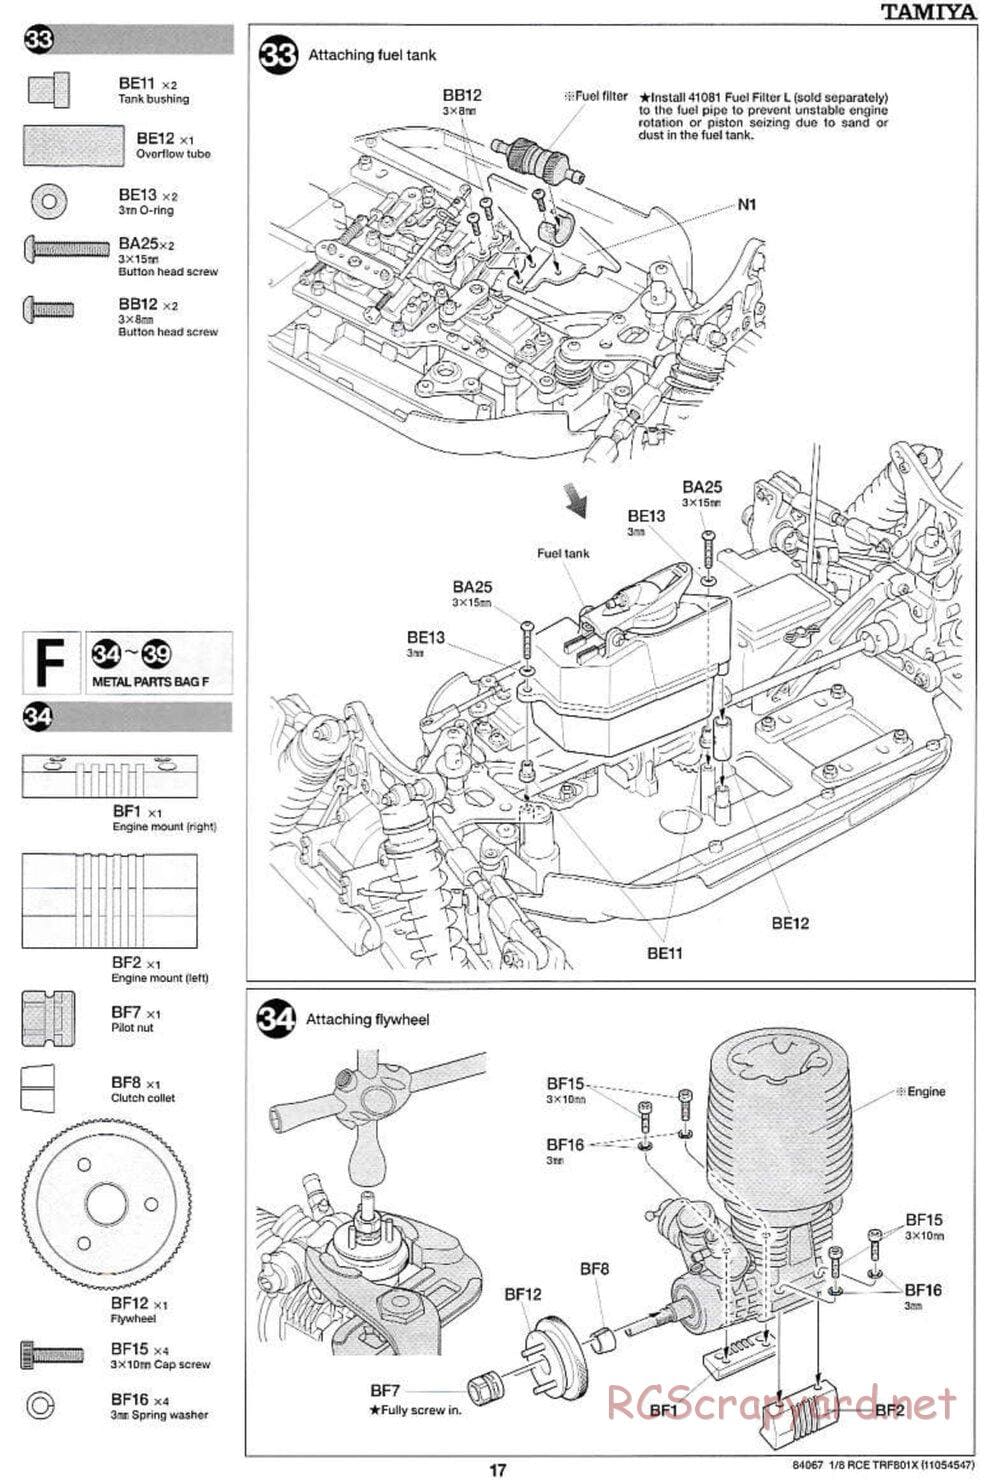 Tamiya - TRF801X Chassis - Manual - Page 17